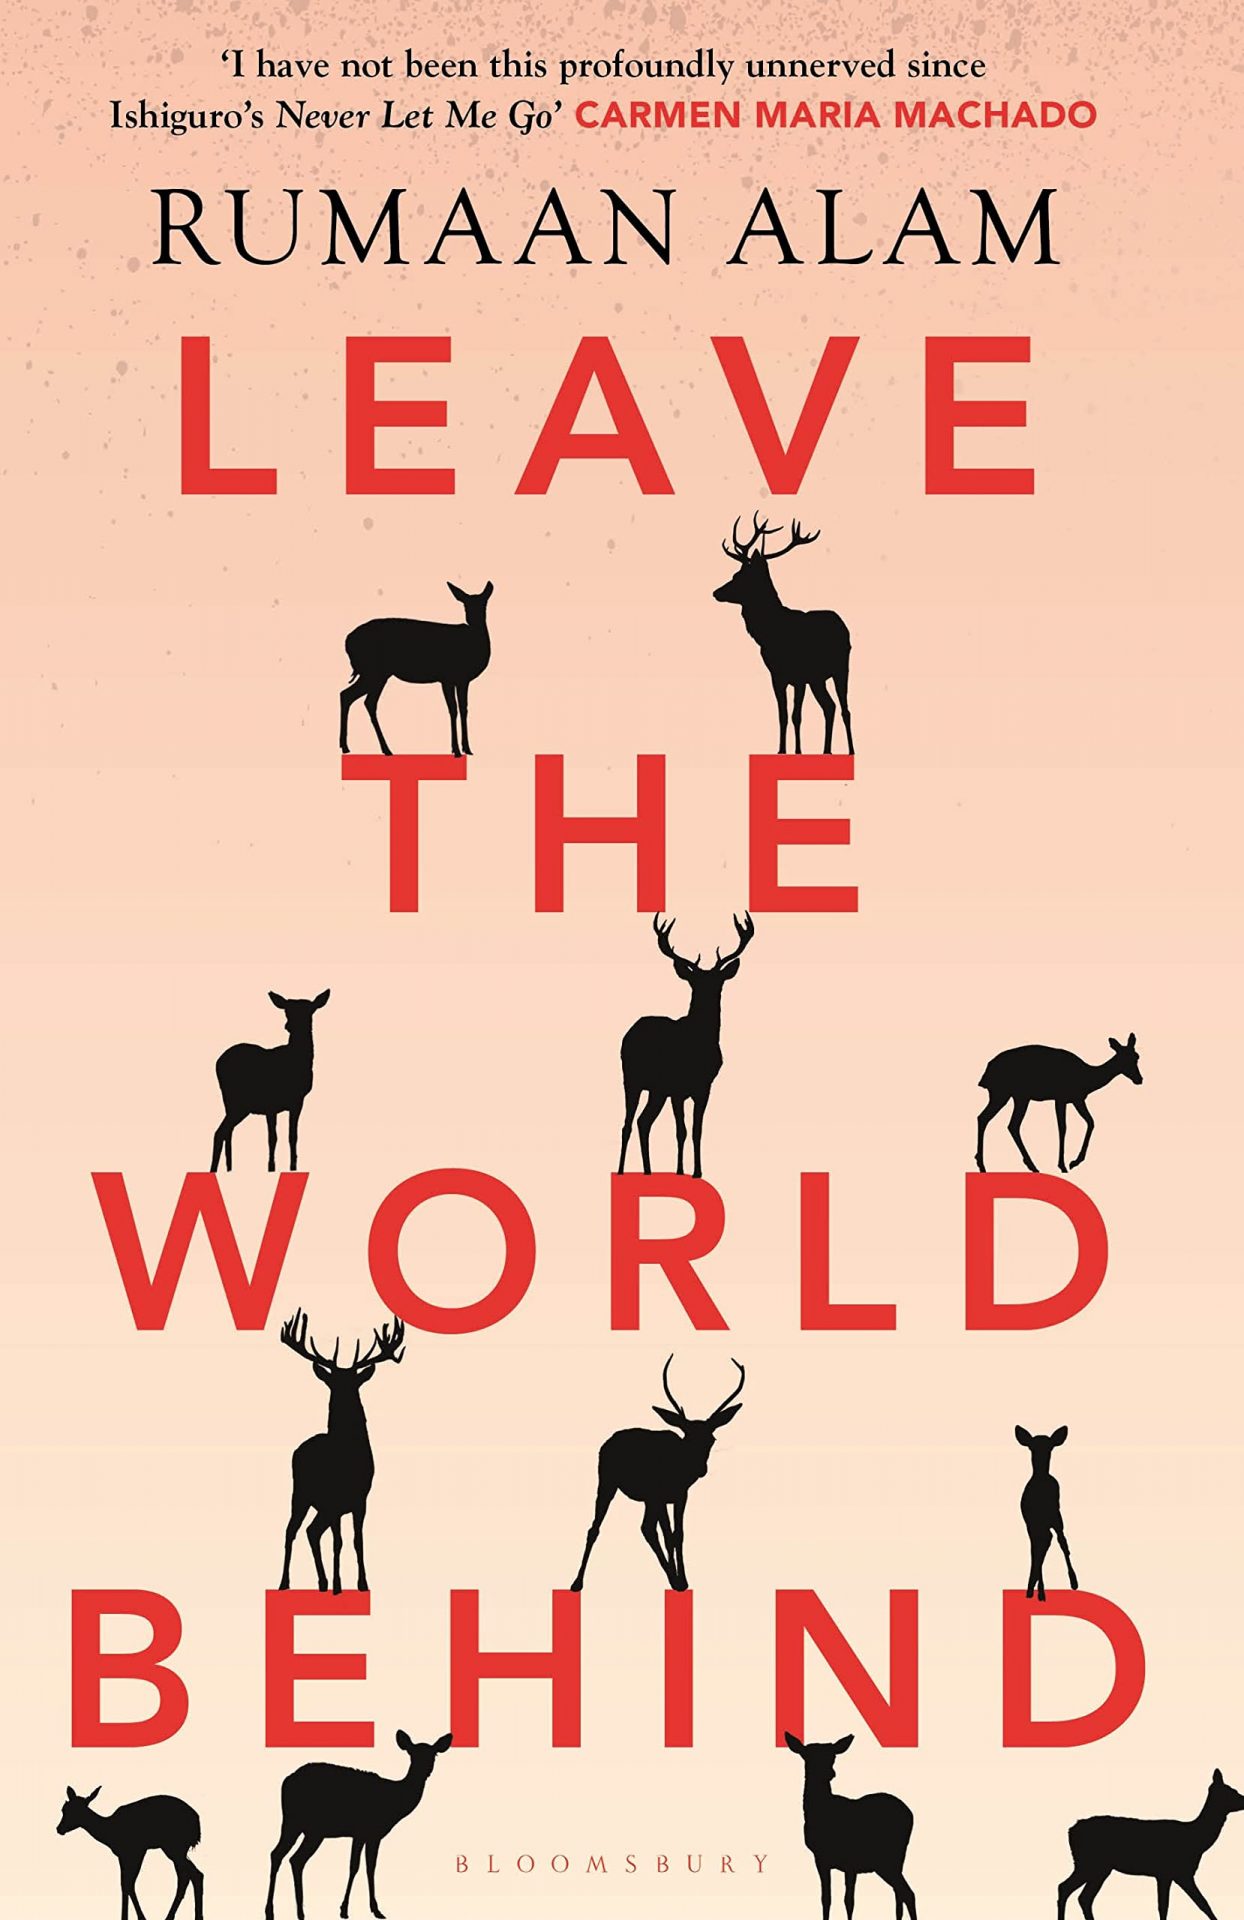 Netflix Debuts 'Leave the World Behind' Trailer Starring Julia Roberts